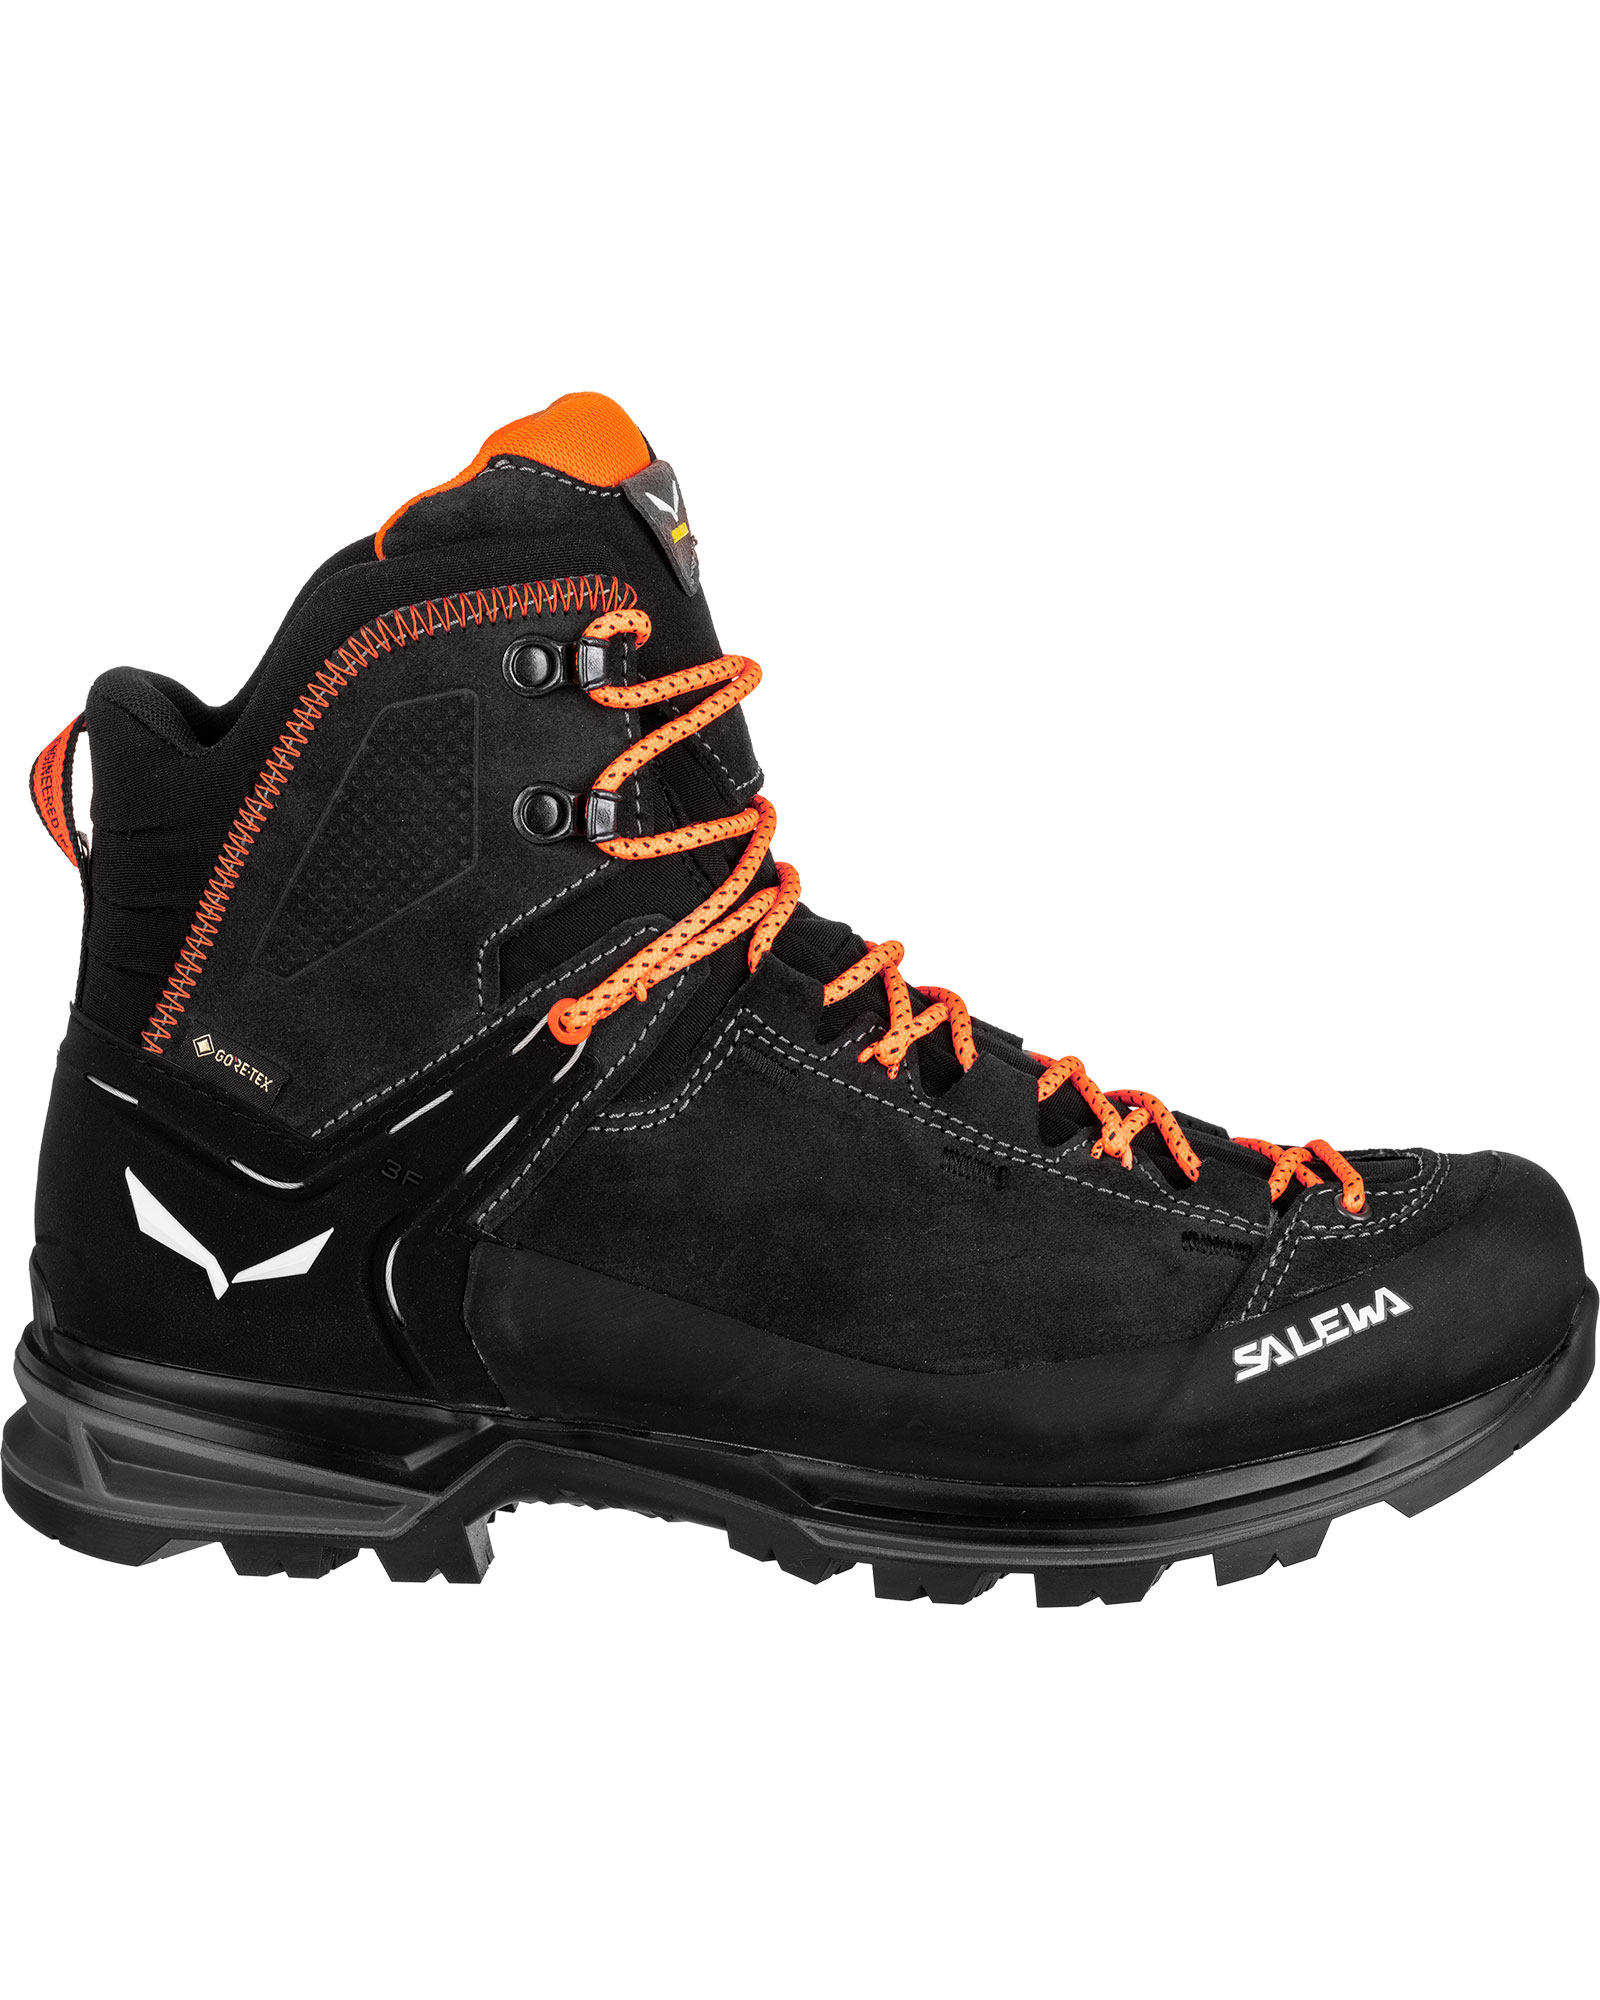 Salewa Mountain Trainer 2 Mid GORE TEX Men’s Boots - Onyx UK 9.5